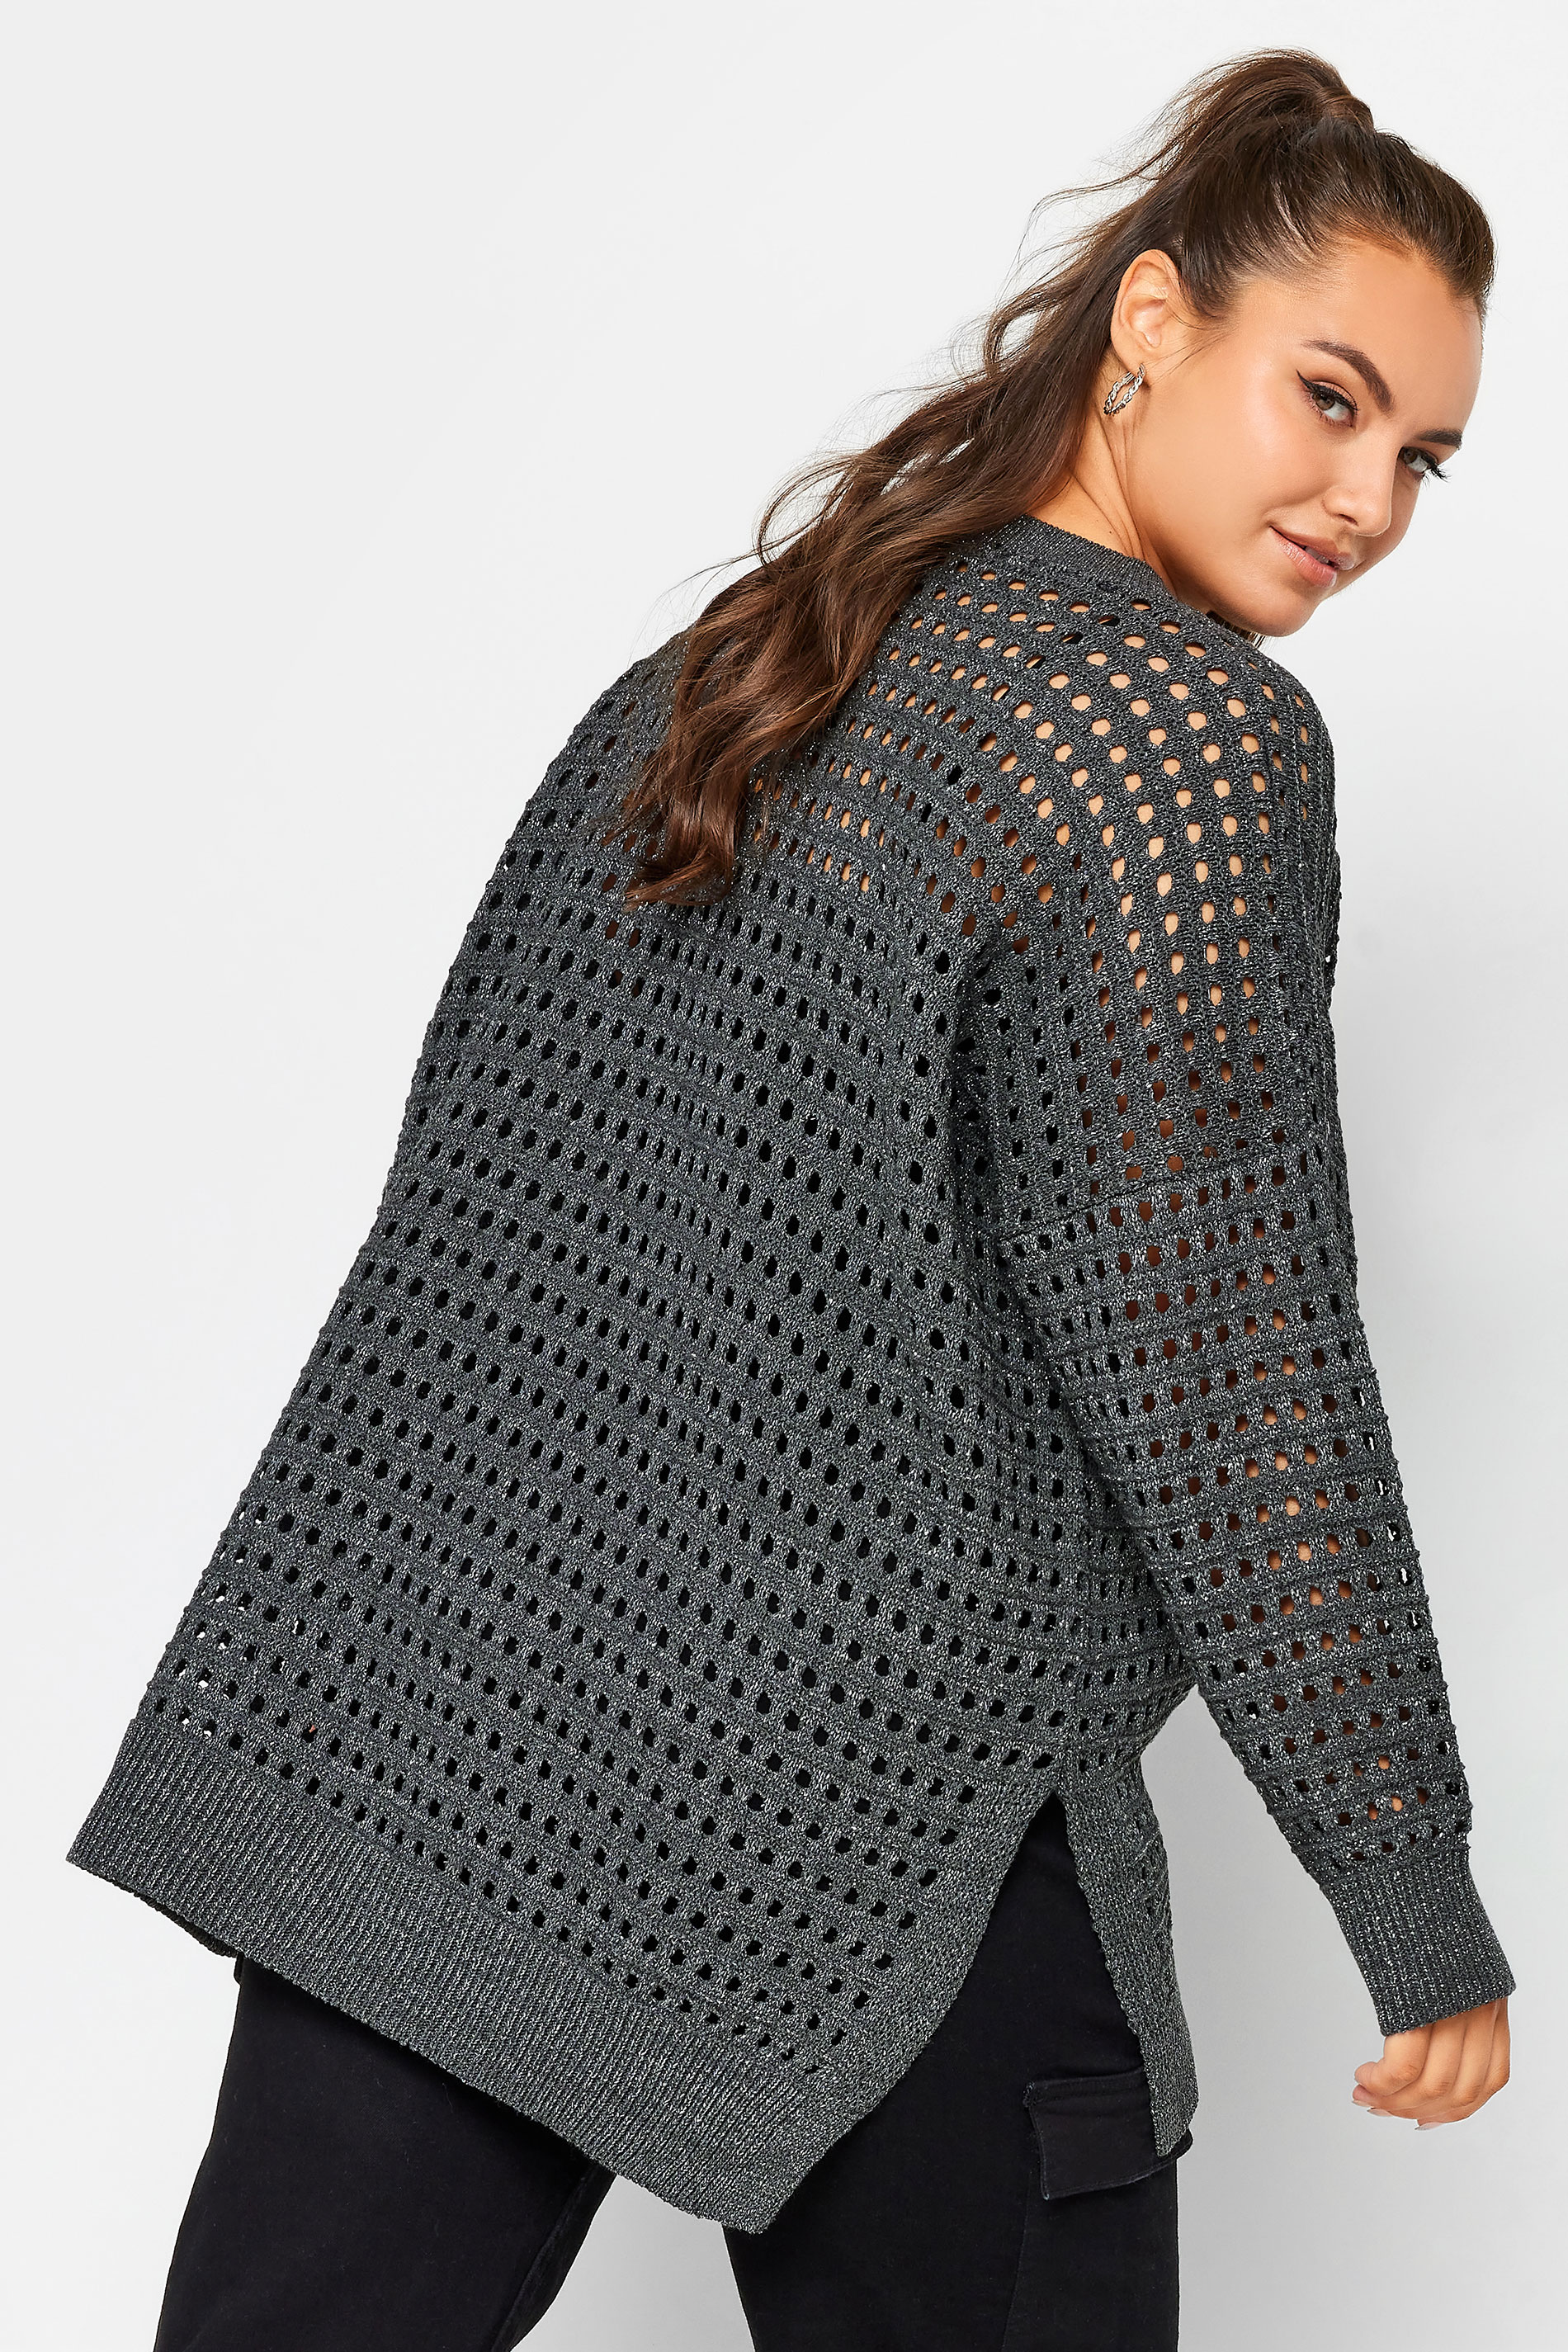 YOURS Plus Size Grey Side Split Metallic Crochet Jumper | Yours Clothing 3